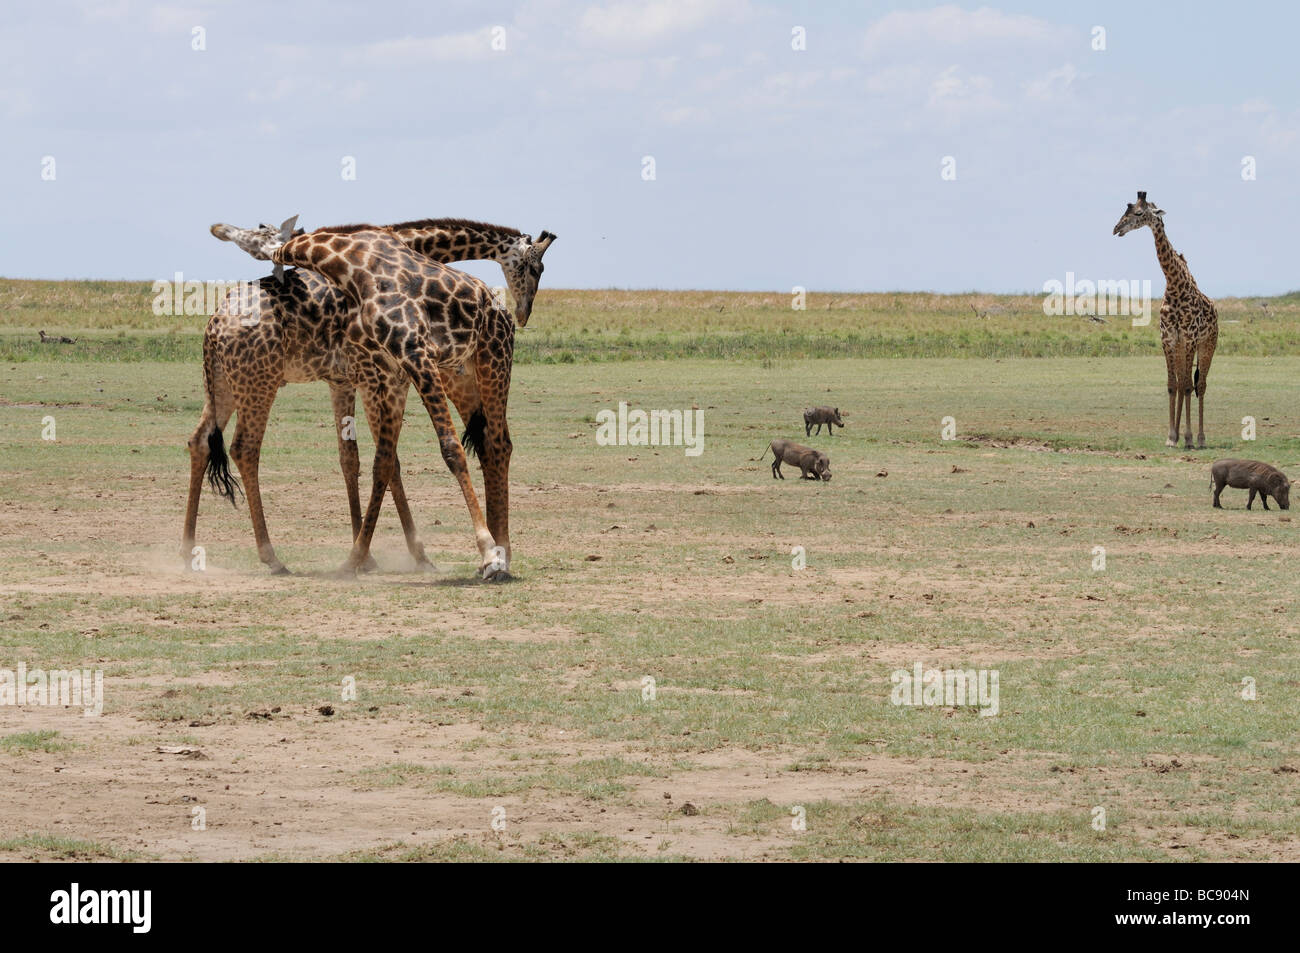 Stock photo of two masai giraffe sparring, Lake Manyara National Park, Tanzania, 2009. Stock Photo